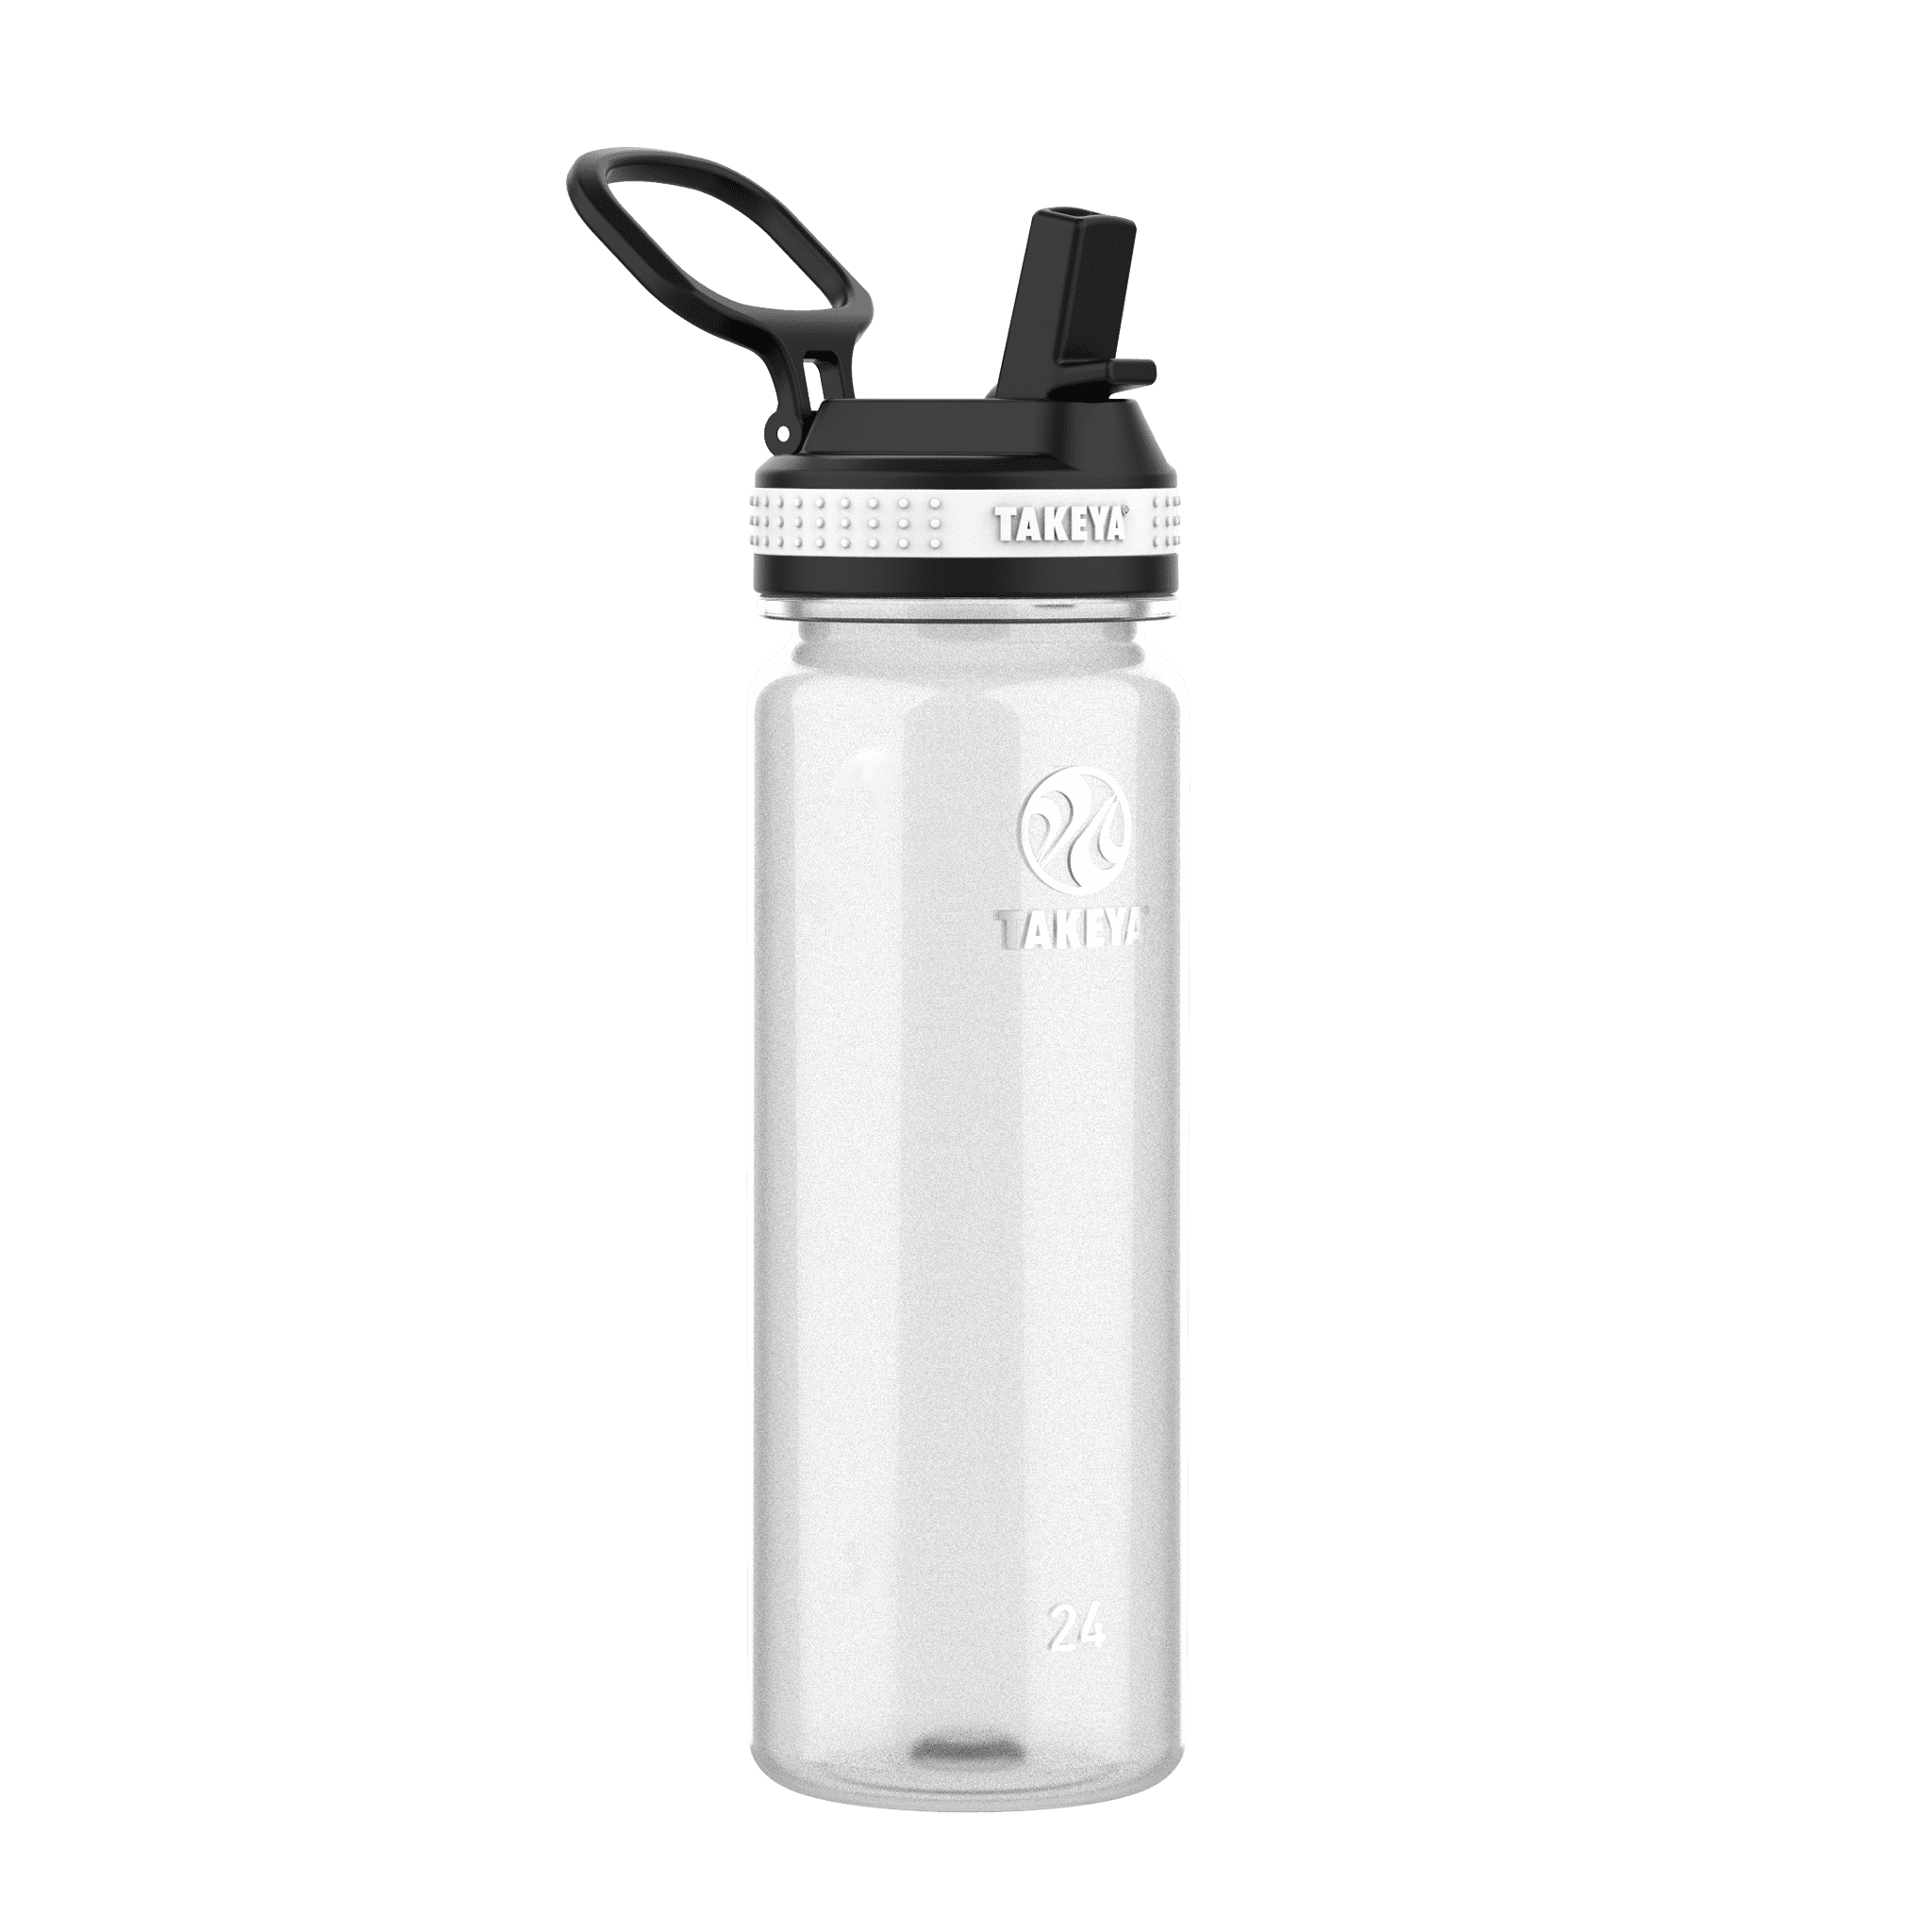 Takeya Tritan Plastic Straw Lid Water Bottle, Lightweight, Dishwasher safe, 24  oz, Clear 